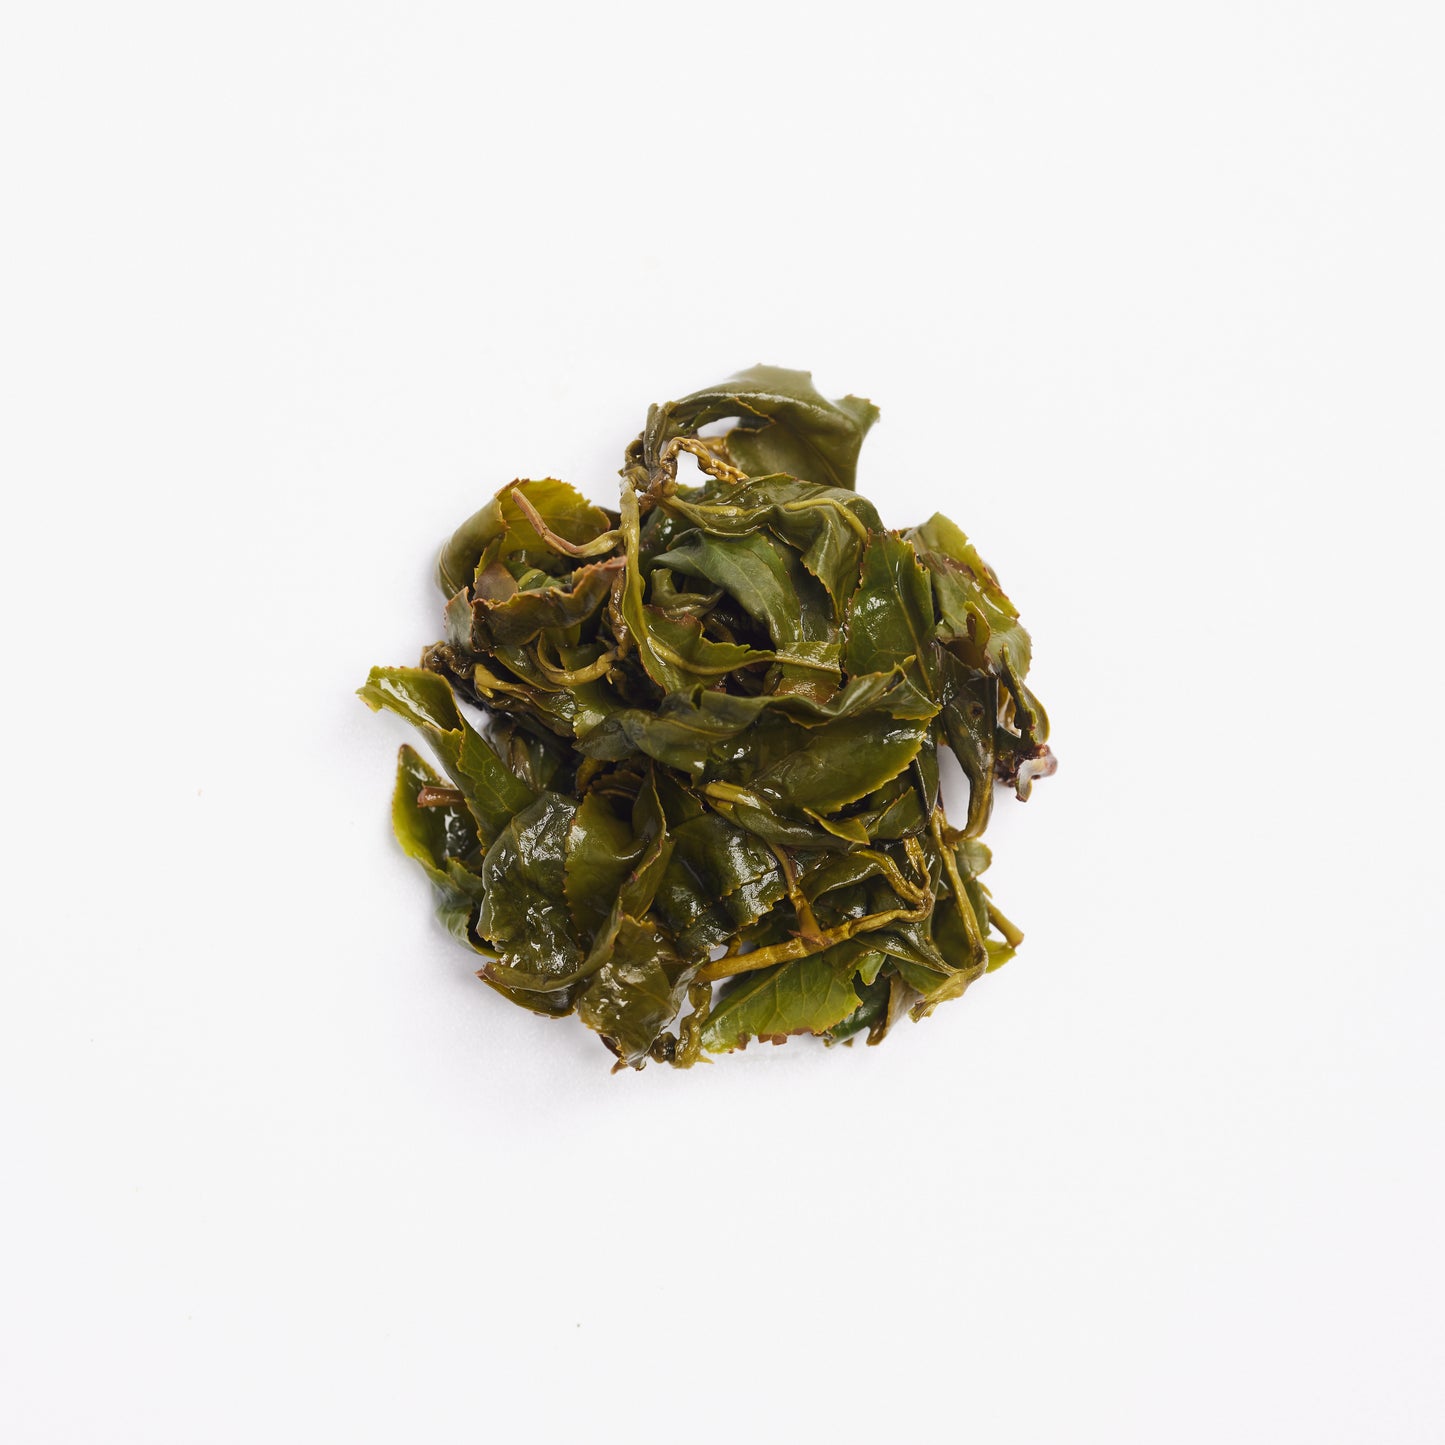 Cui Feng (High Mountain Oolong Tea)